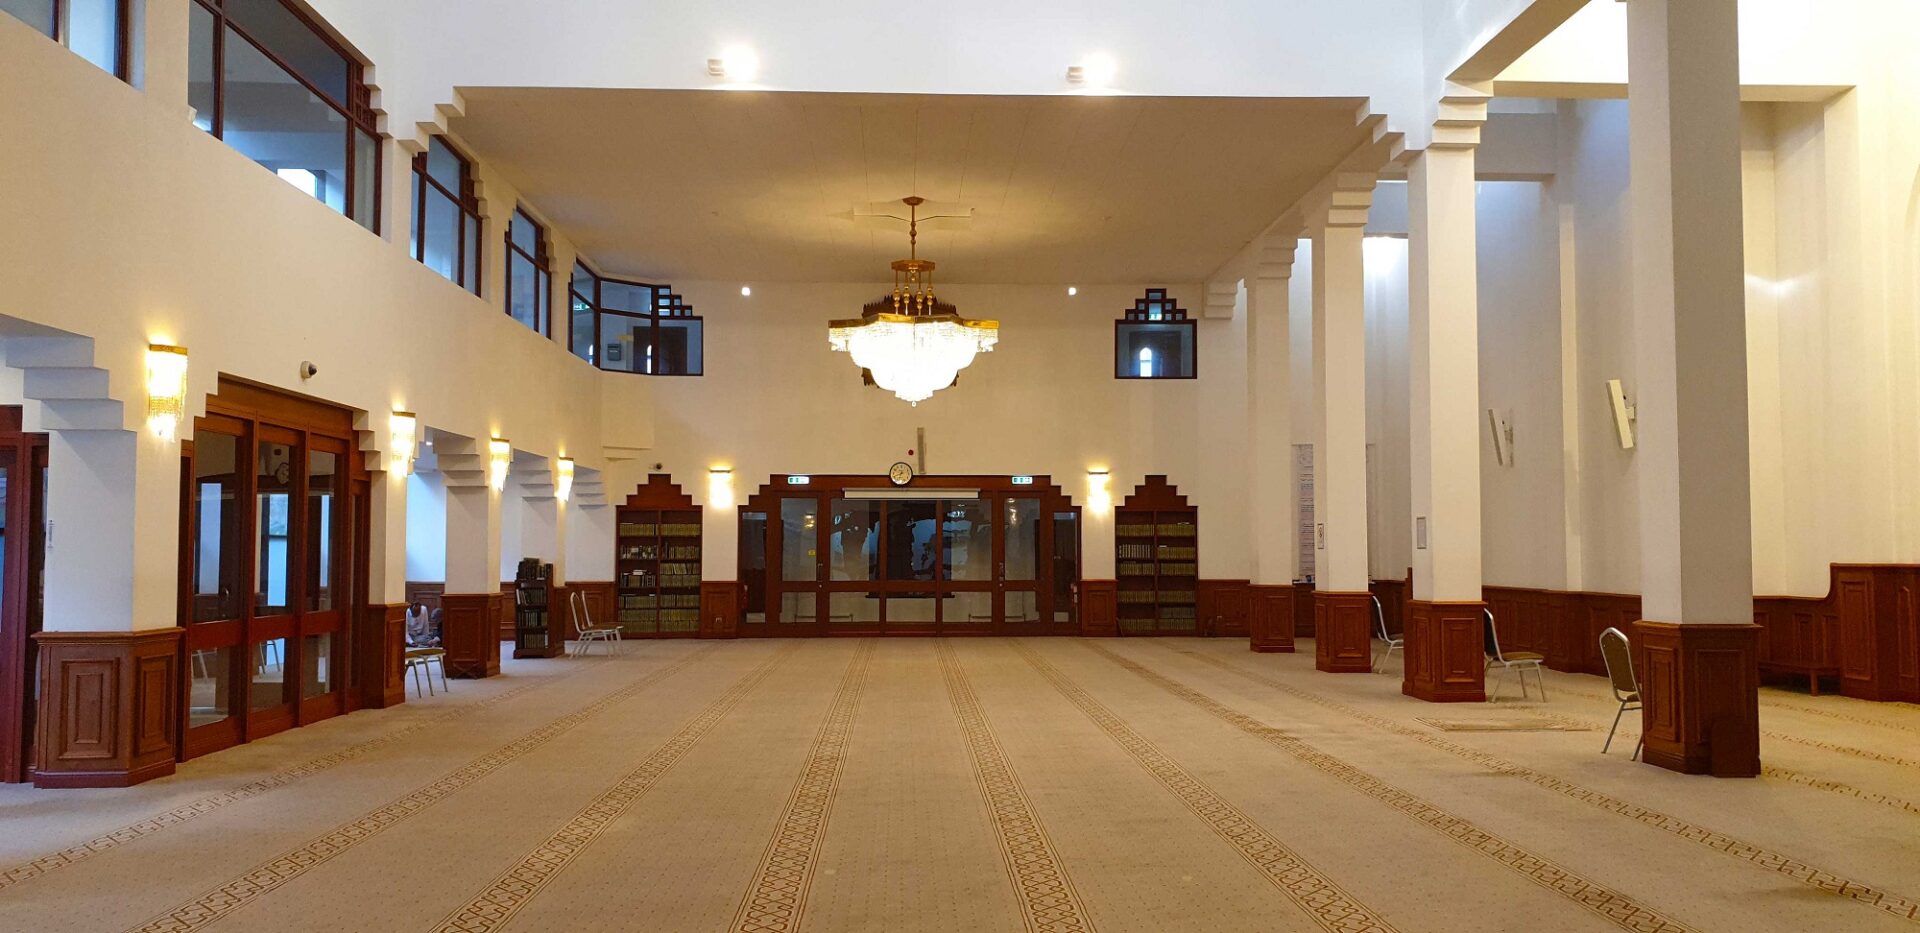 Edinburgh Central Mosque interior